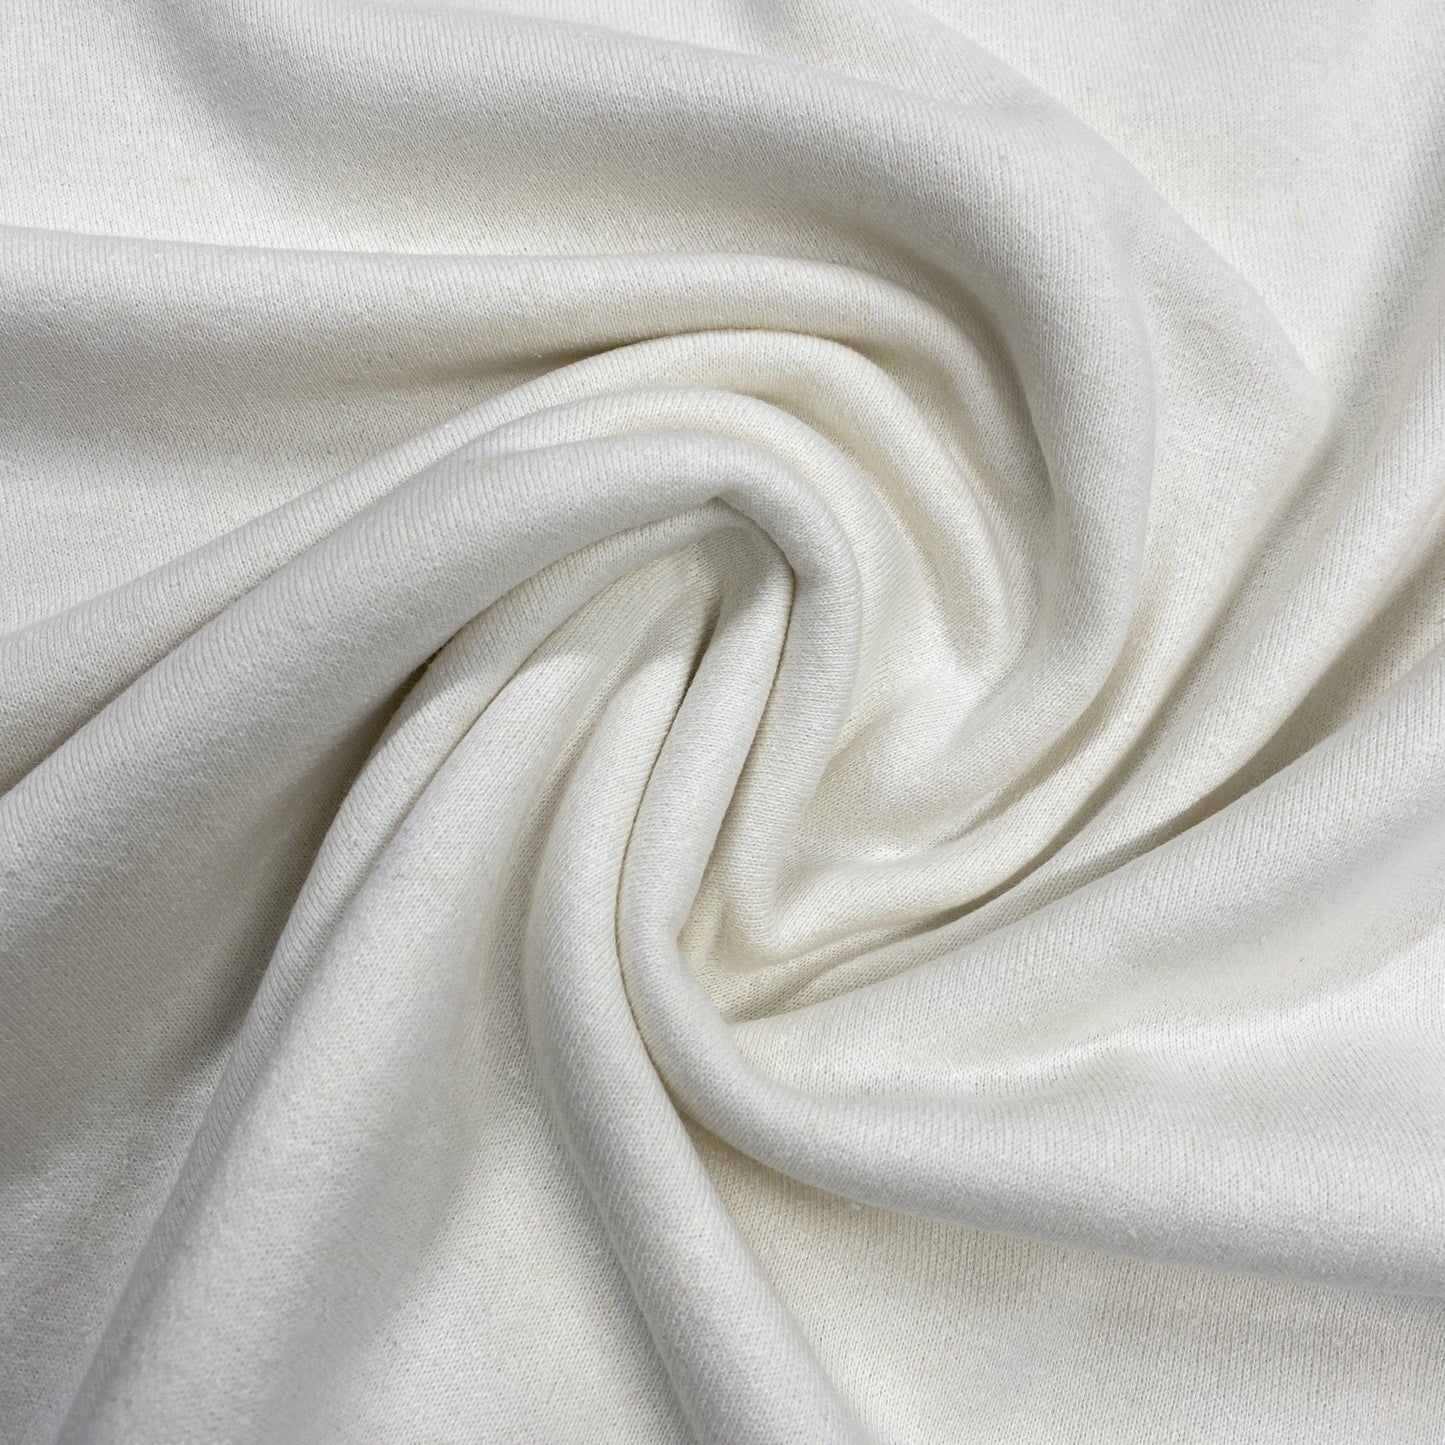 Hemp Cotton Fleece Fabric - 370 GSM, $12.23/yd, 15 Yards - Nature's Fabrics